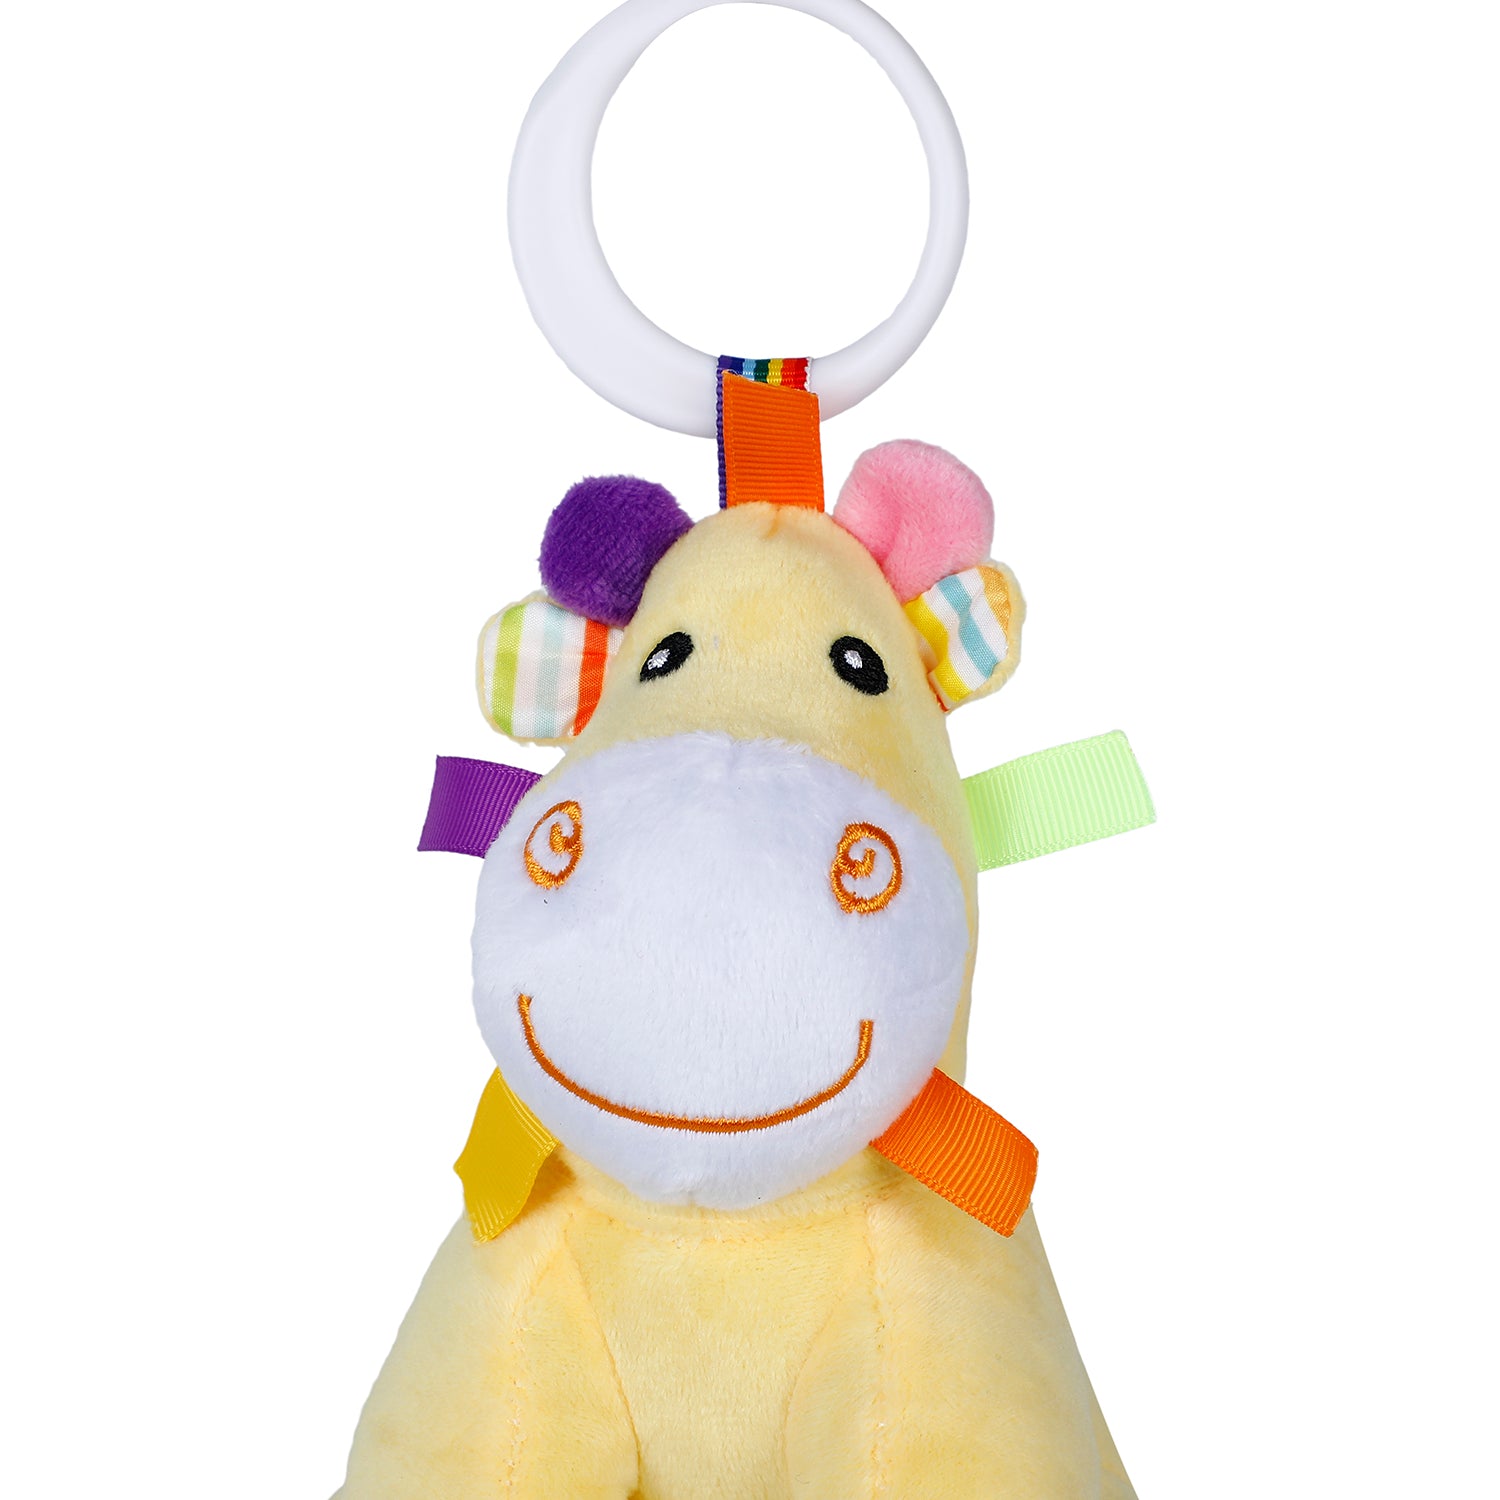 Baby Moo Baby Giraffe Hanging Musical Pulling Toy - Yellow